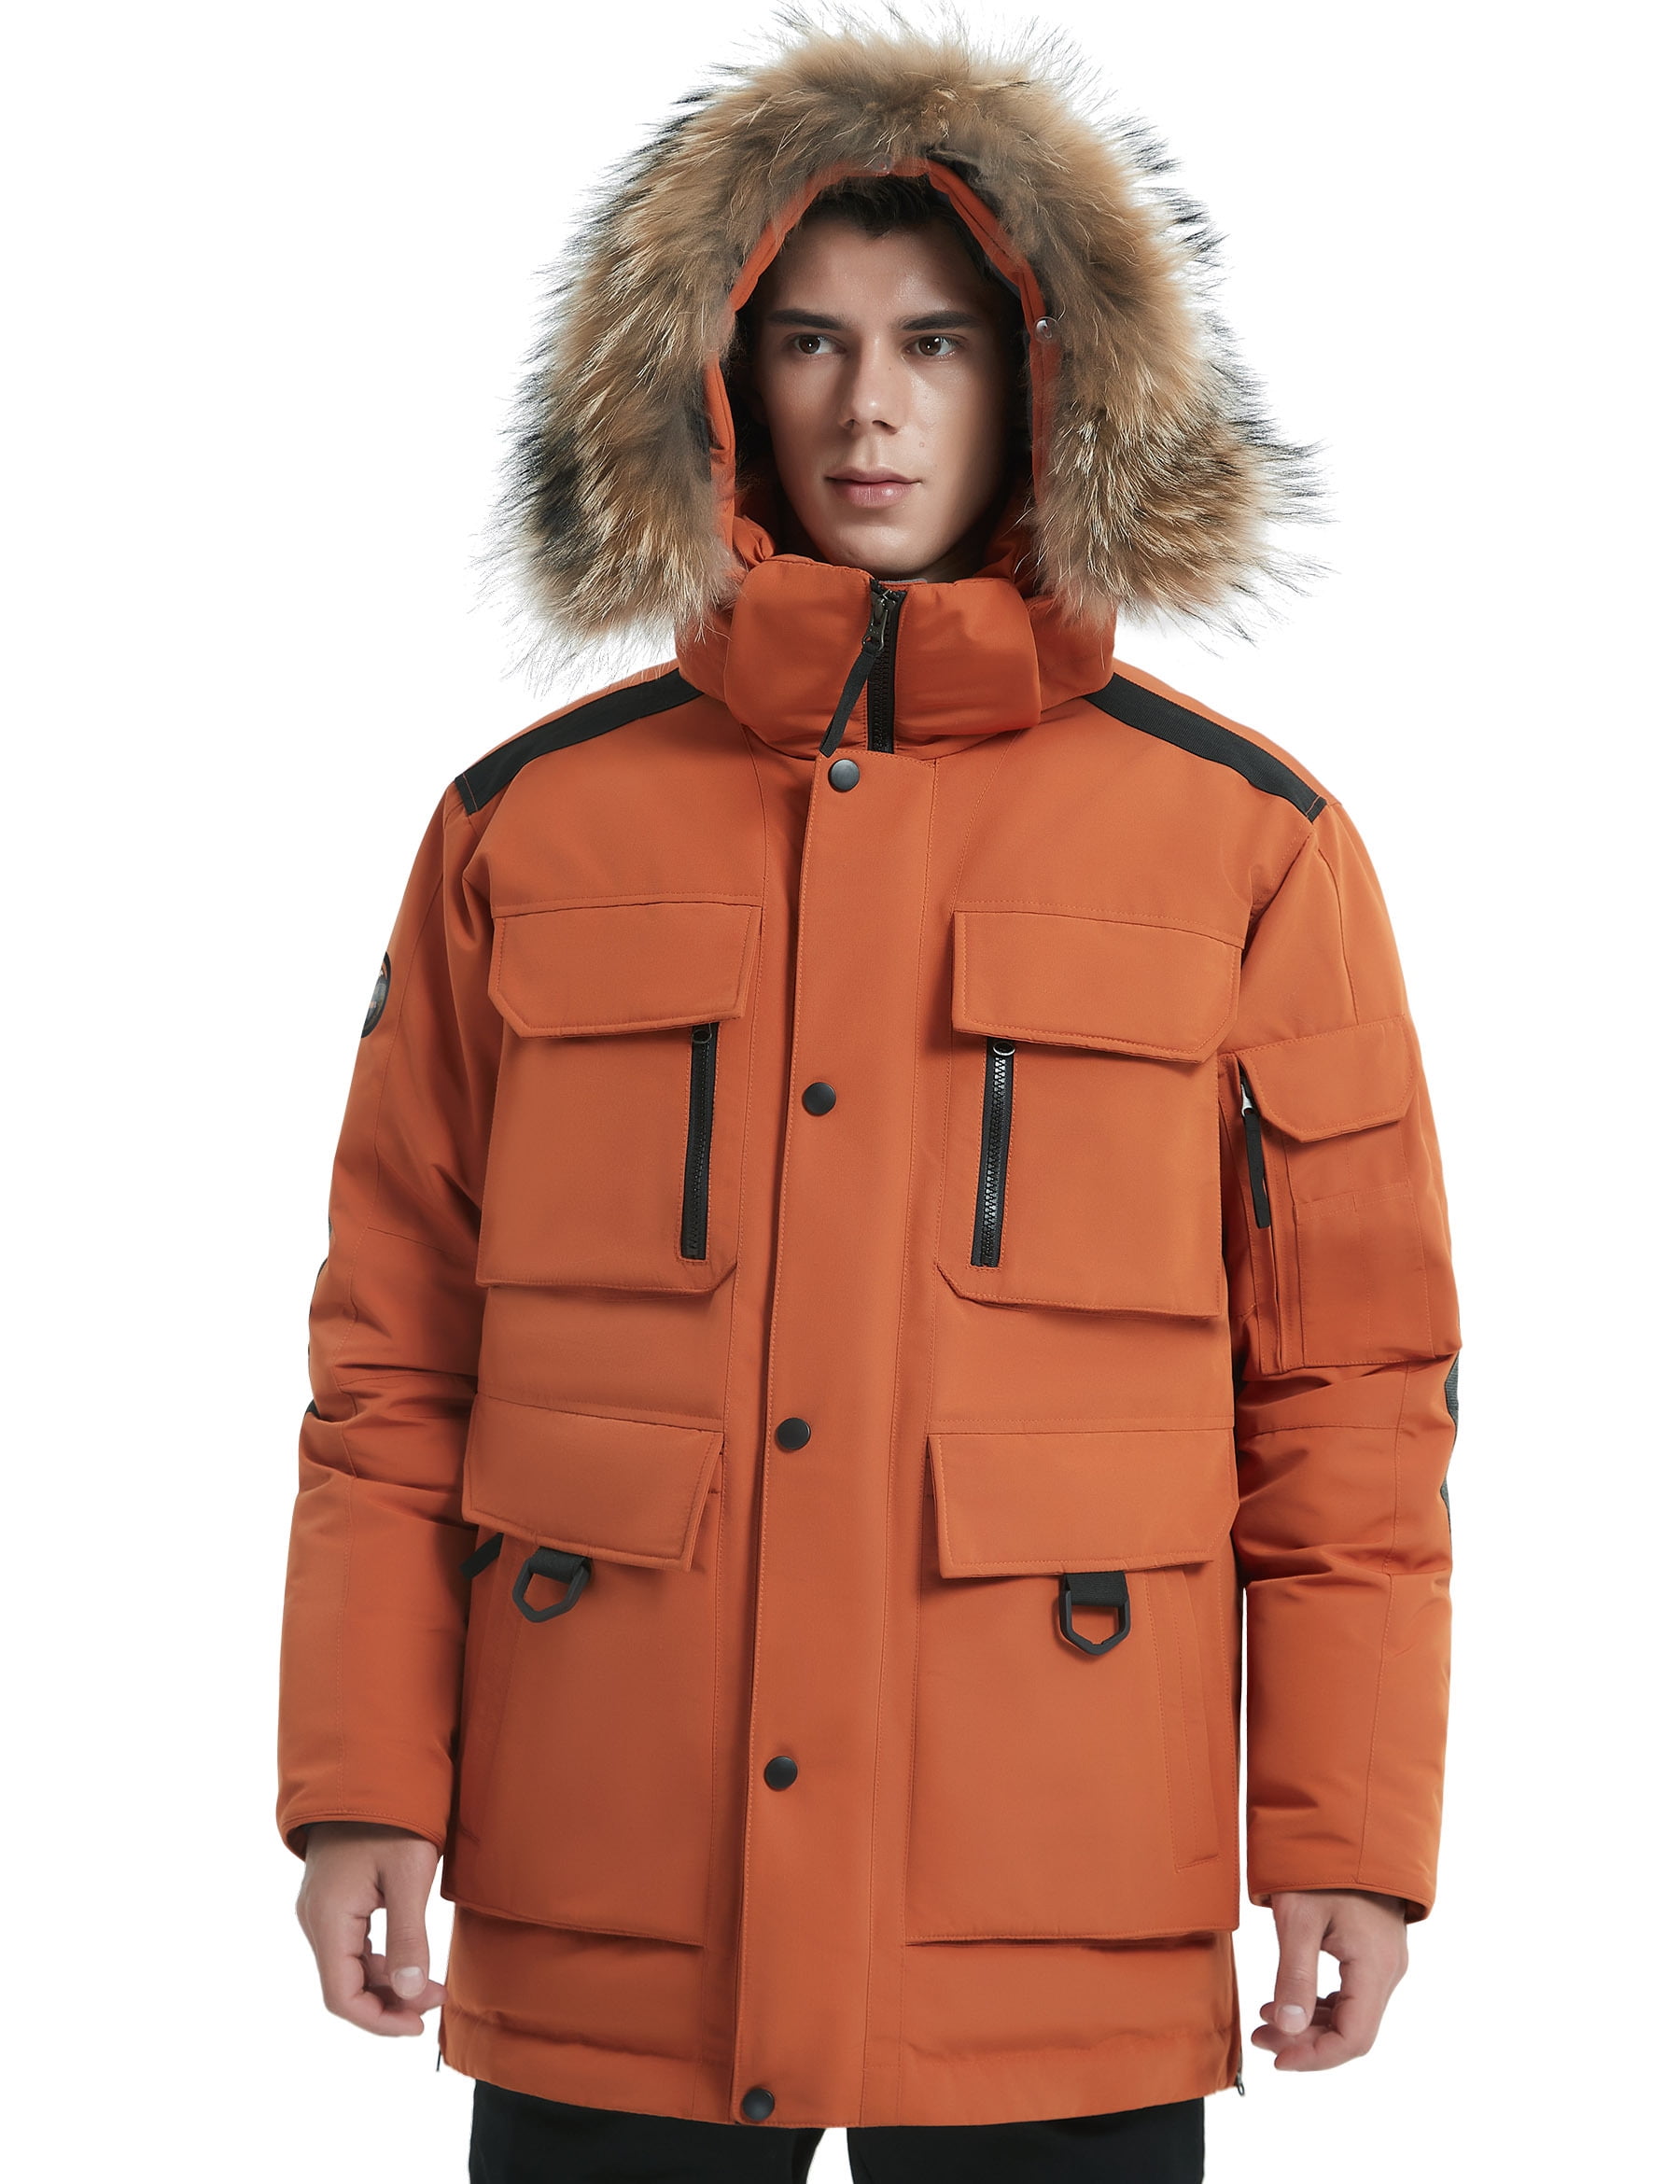 Men's Goose Down Parka Extreme Warm Winter Jacket with Hood - Walmart.com